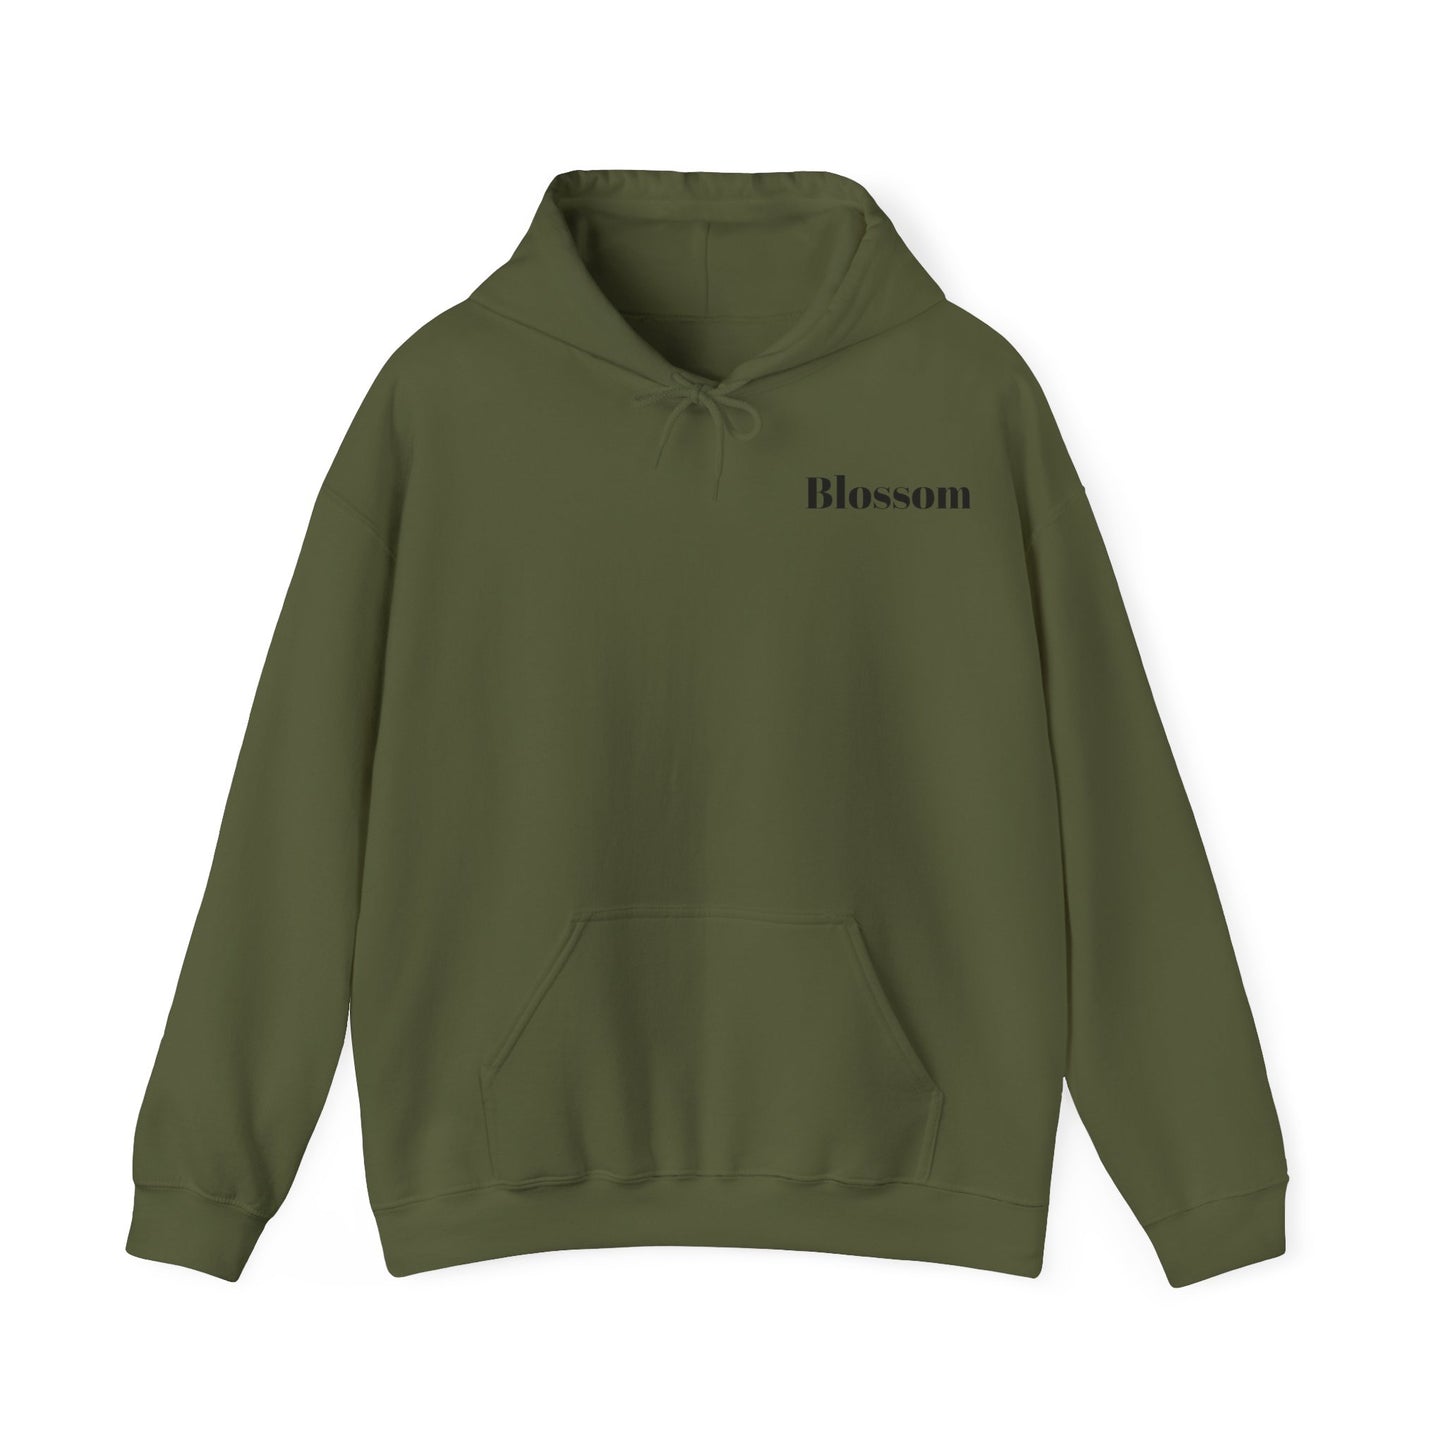 Blossom Unisex Hooded Sweatshirt with Heavy Blend Fabric14